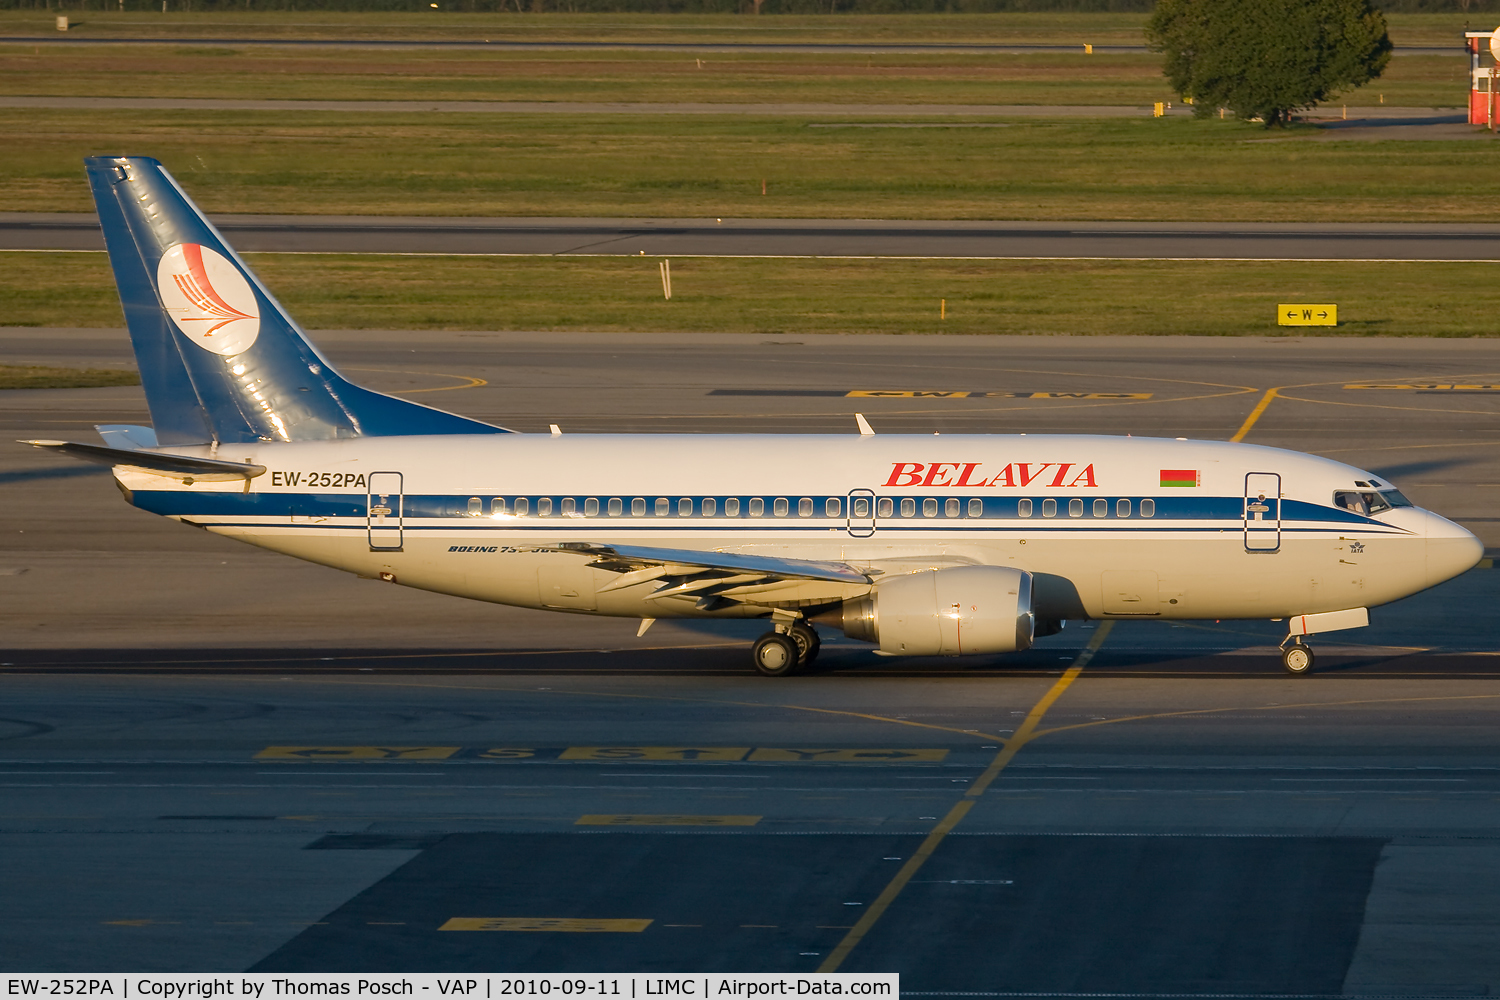 EW-252PA, 1996 Boeing 737-524 C/N 26340, Belavia